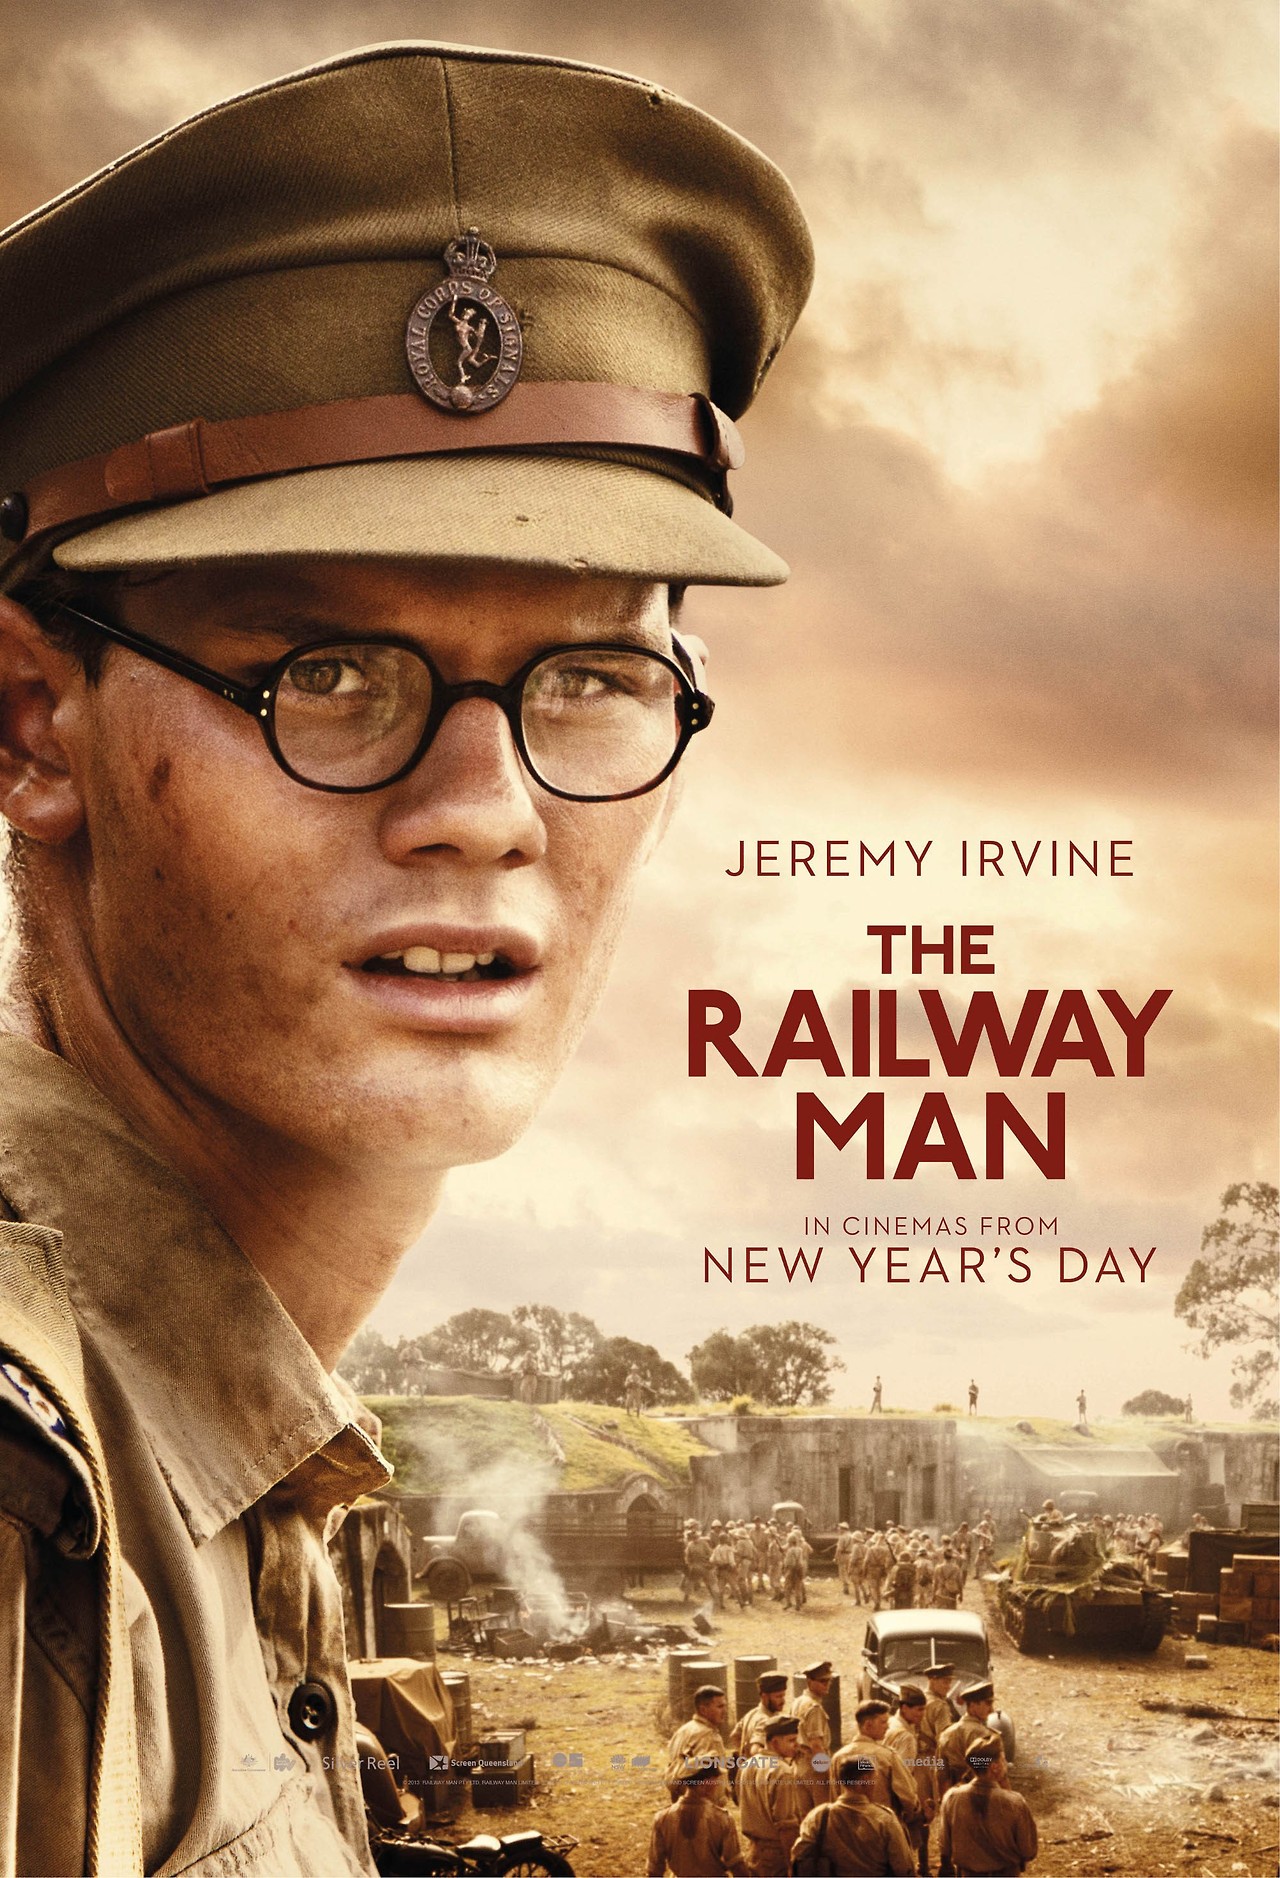 Jeremy Irvine in The Railway Man 2013